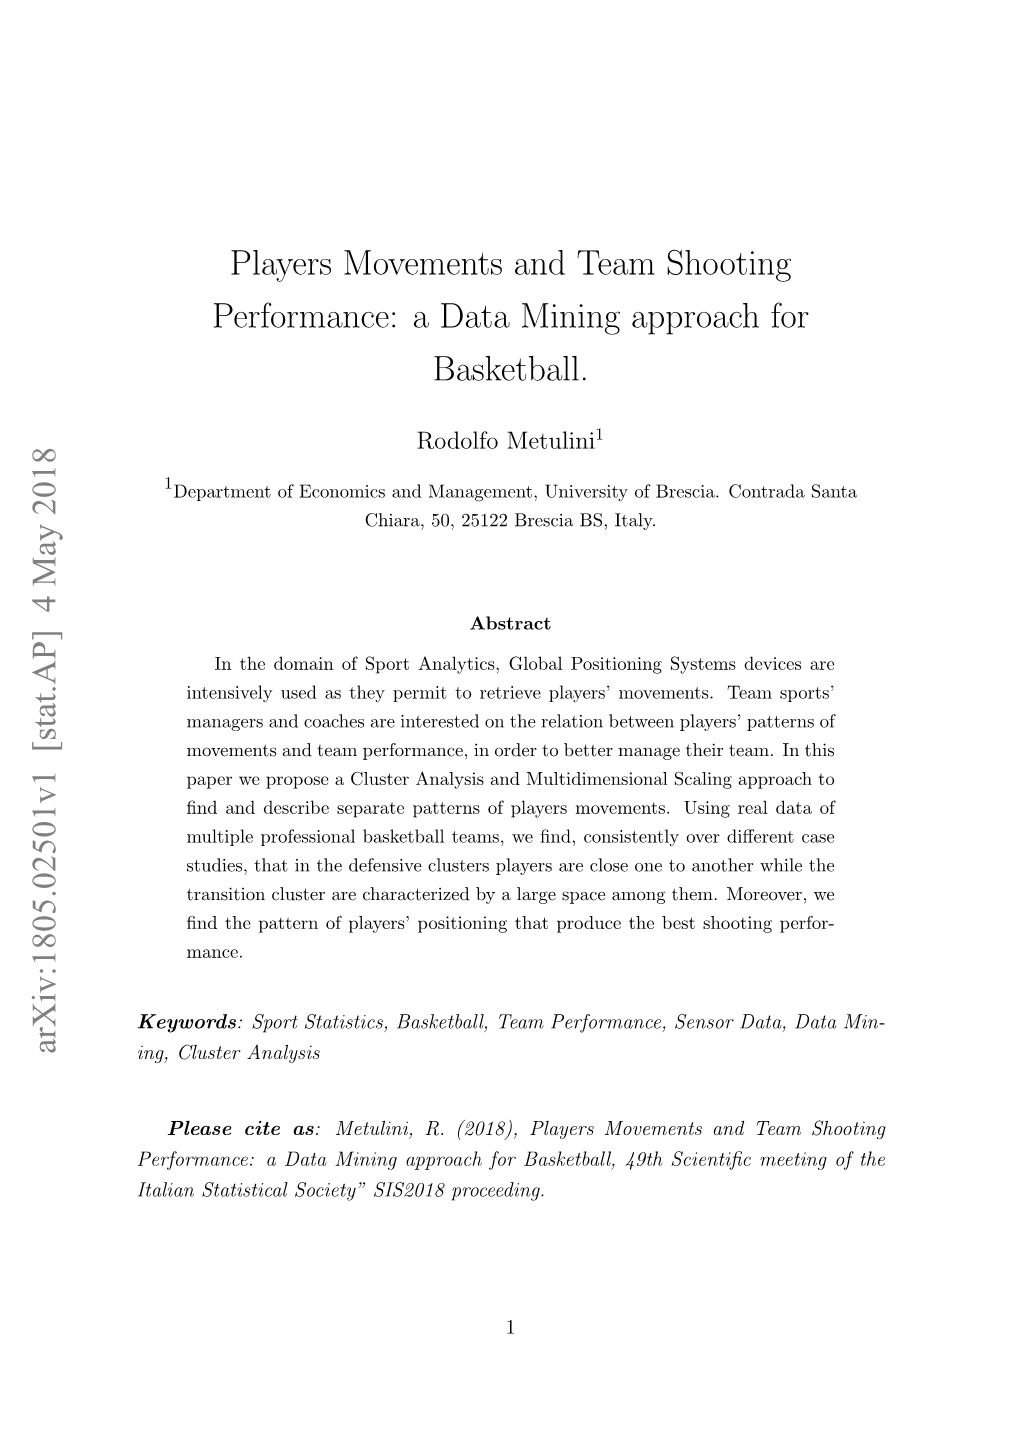 A Data Mining Approach for Basketball